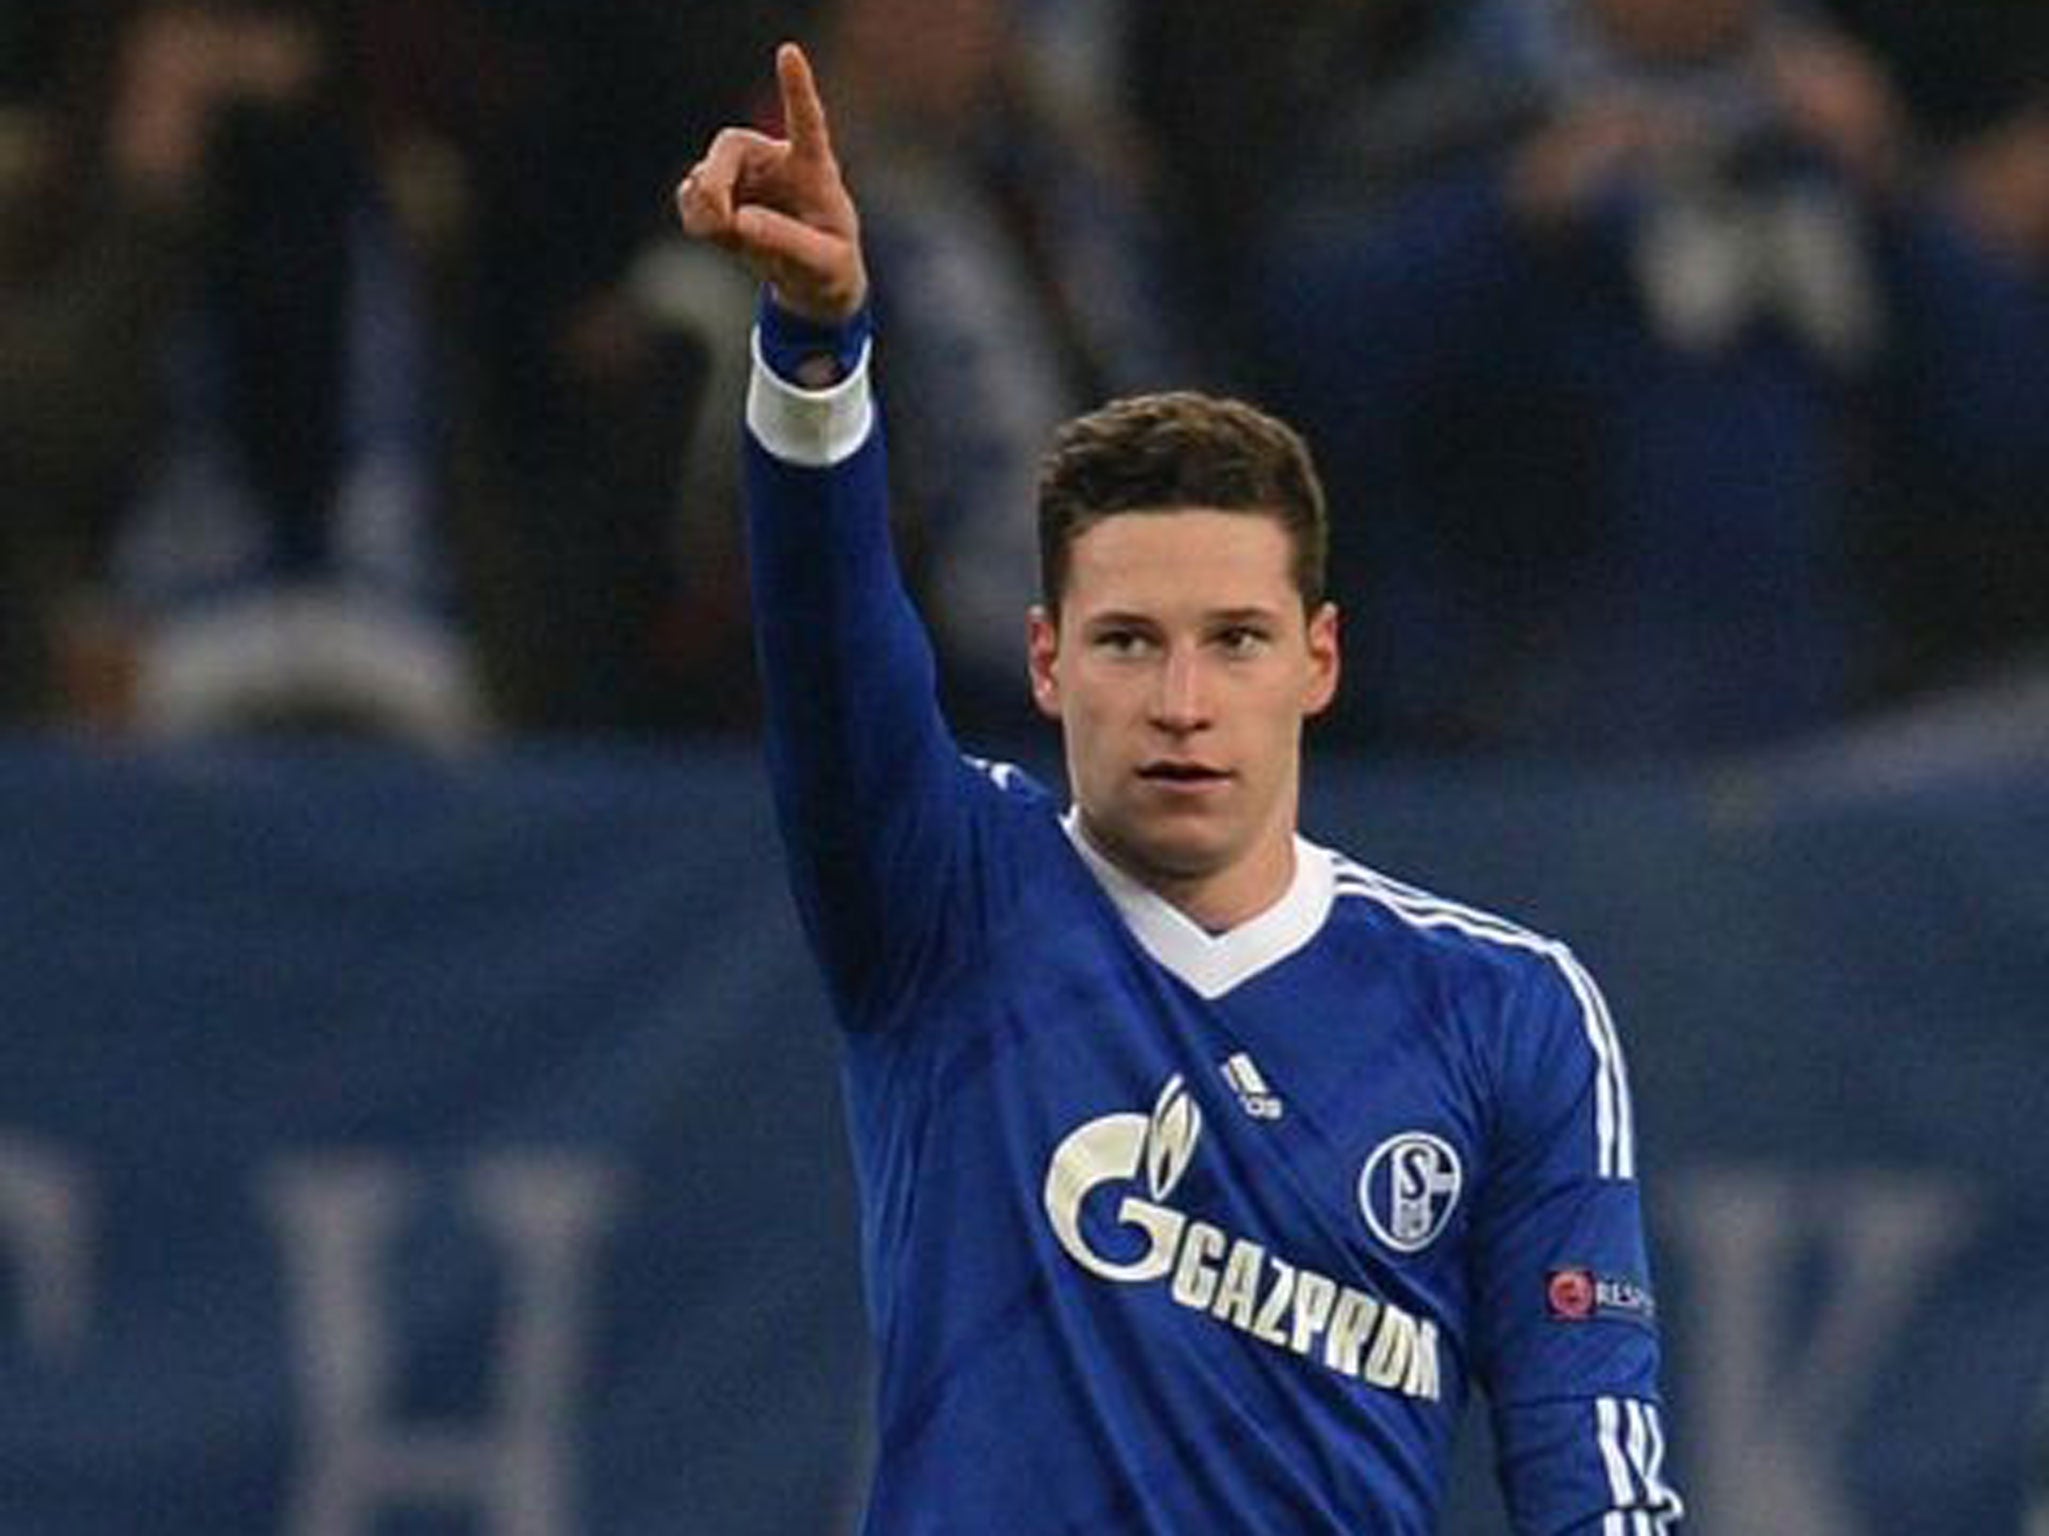 Schalke's midfielder Julian Draxler celebrates after scoring